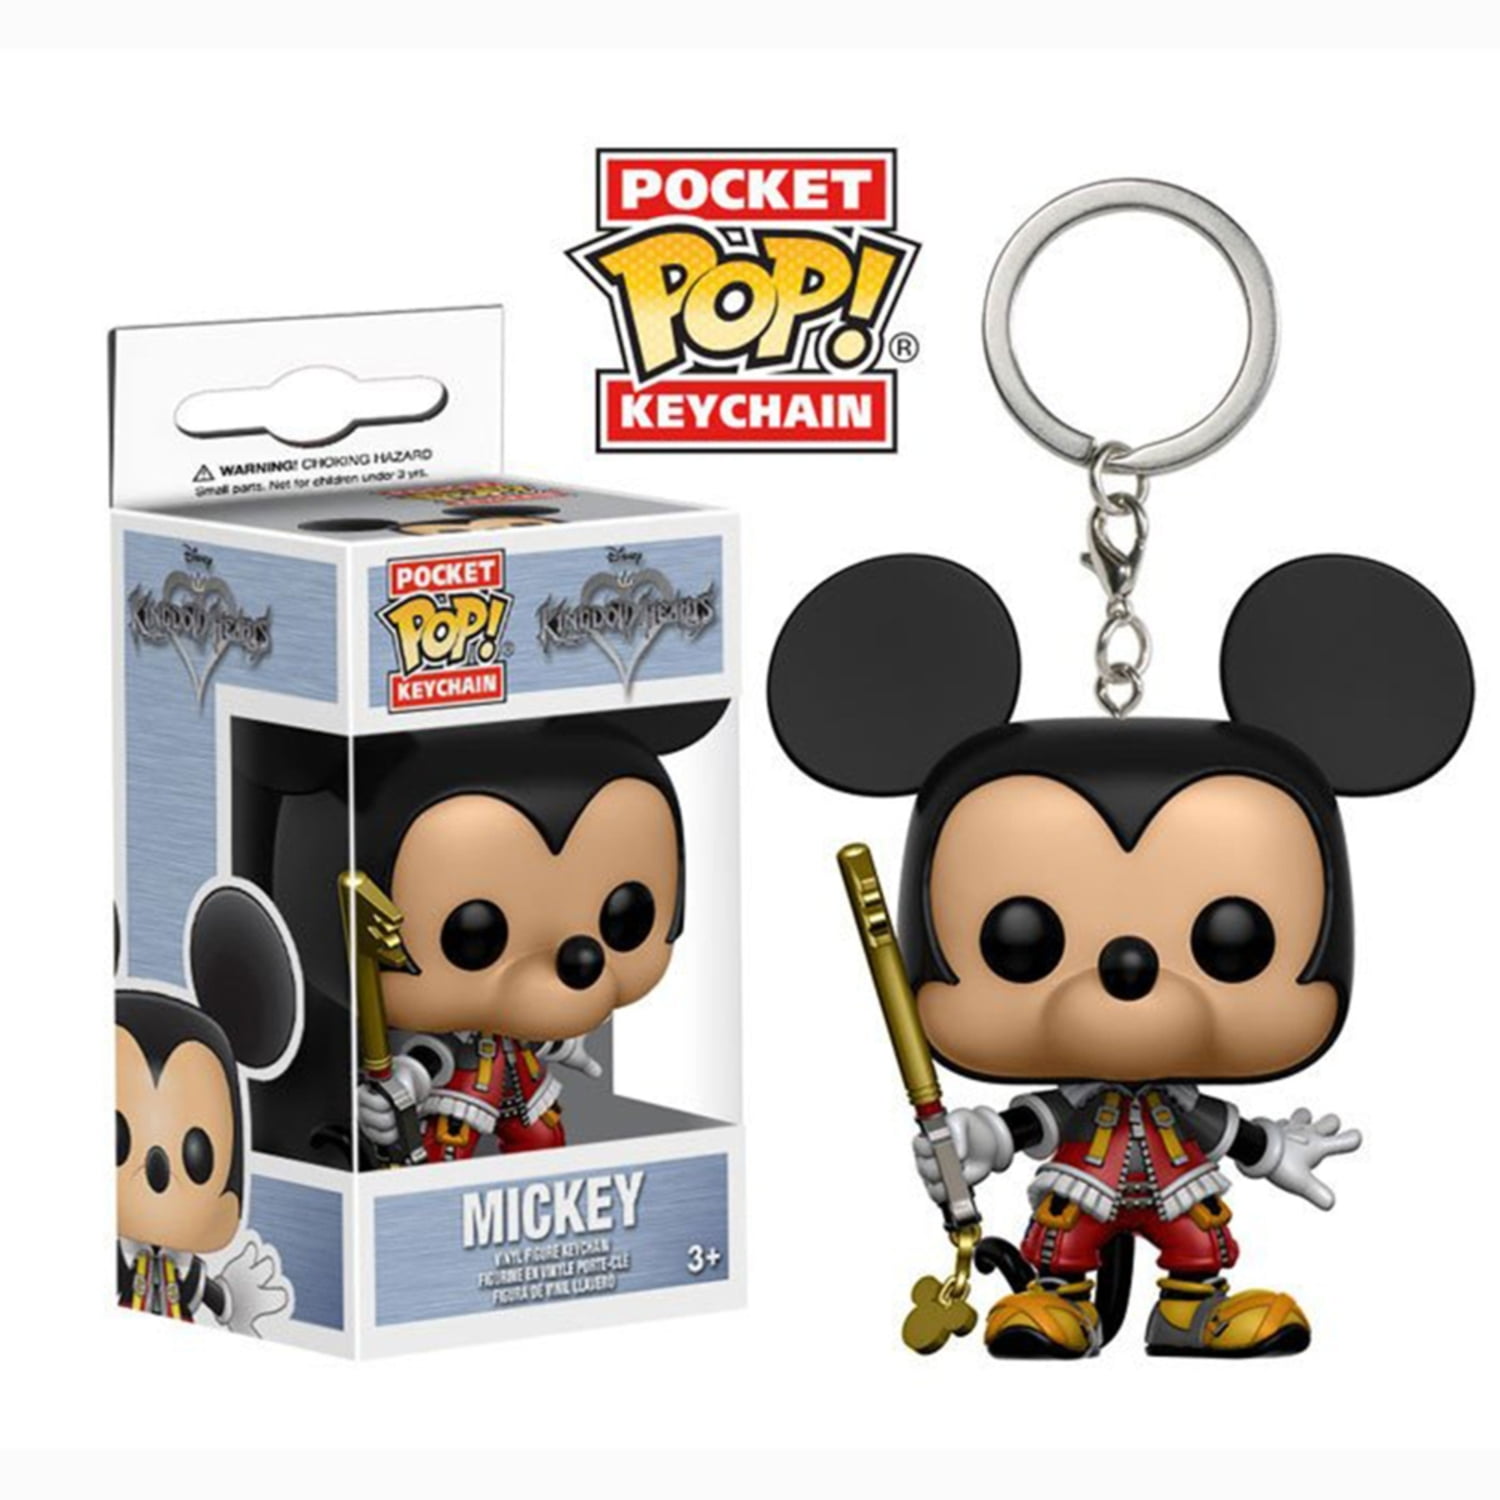 Disney Kingdom Hearts King Mickey Walmart Exclusive Collectible